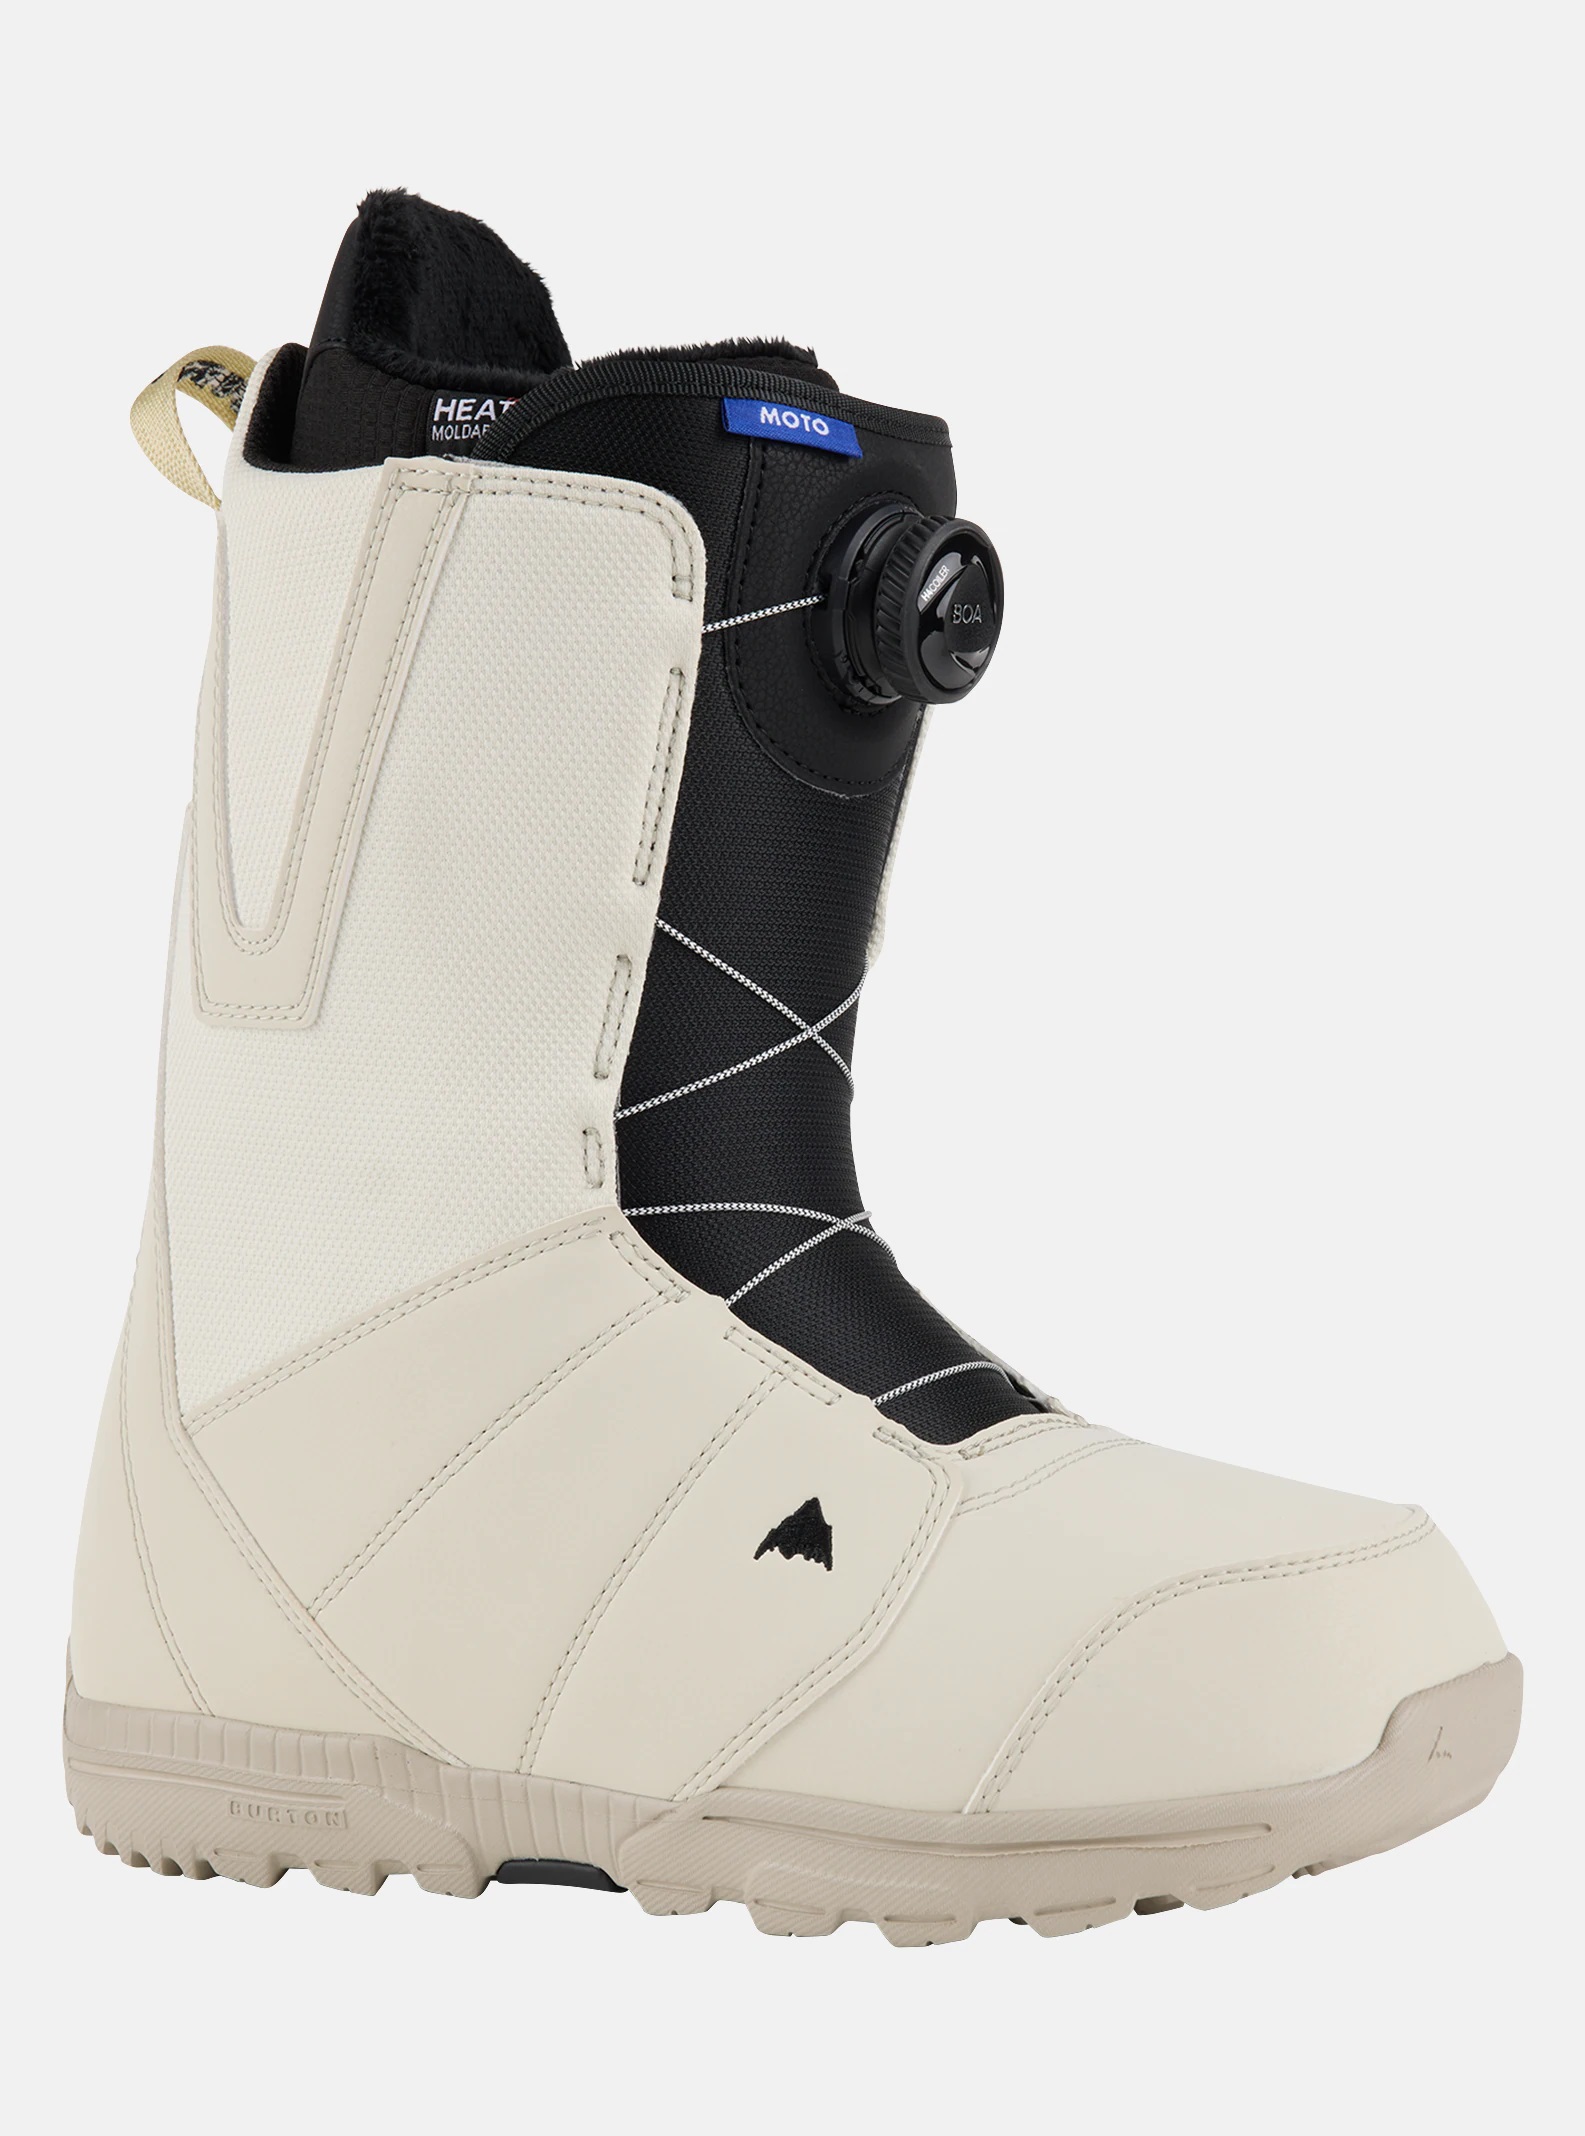 Boots Snowboard BURTON - Men's - MOTO BOA Stout White W24